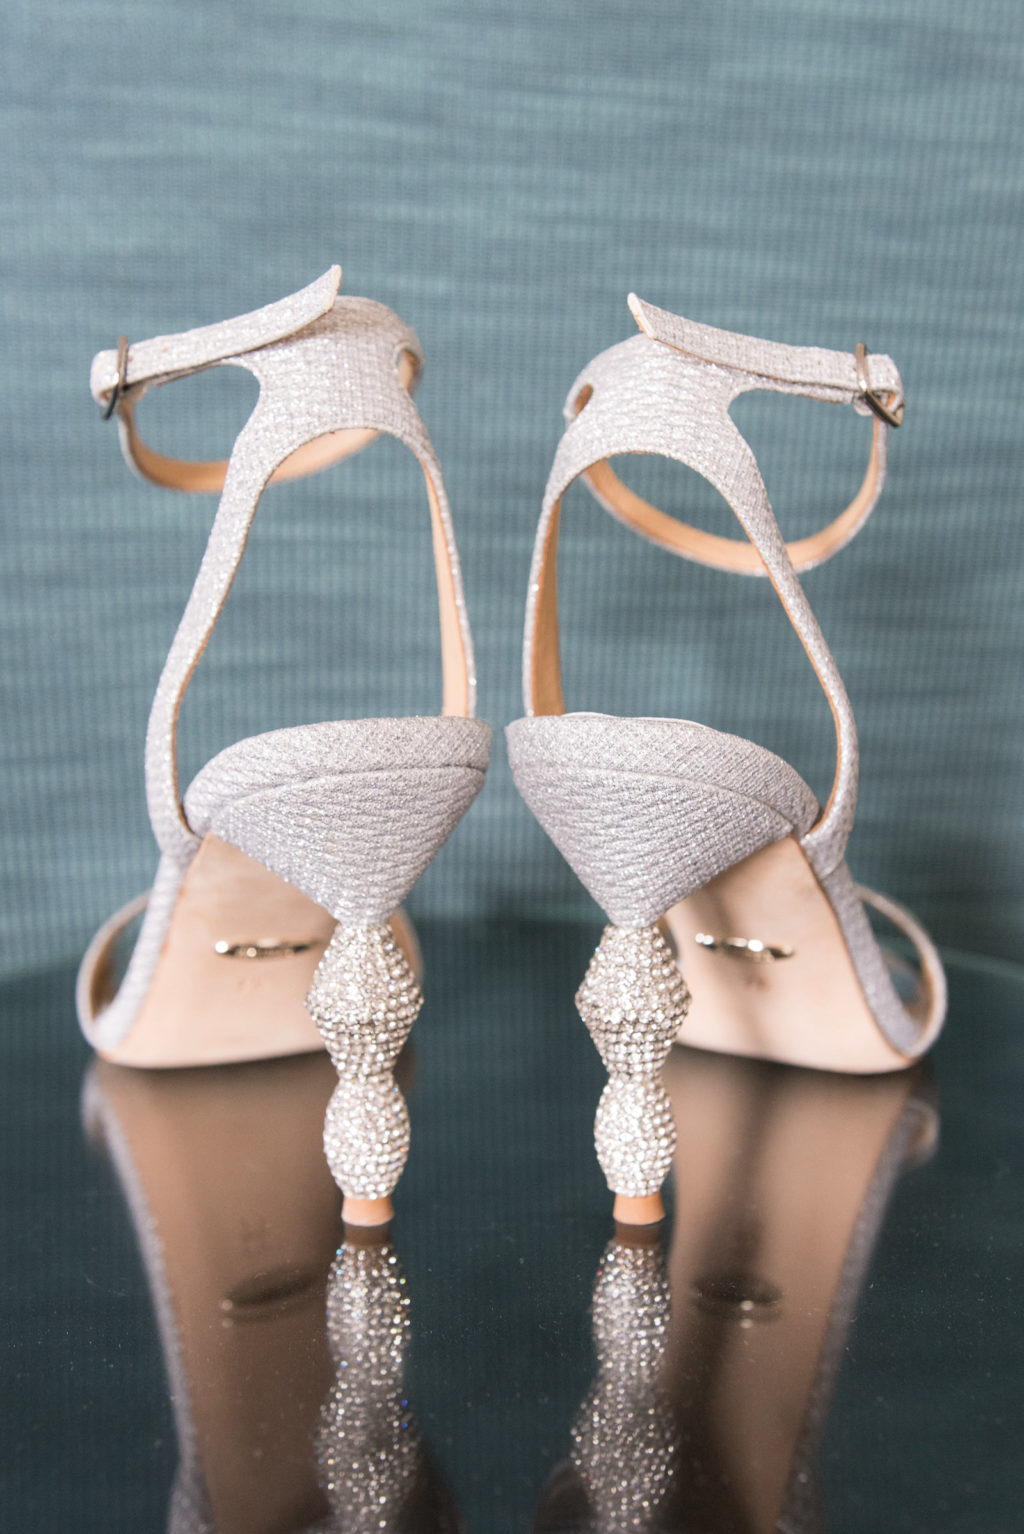 Badgley Mischka Designer Bridal Wedding Shoes with Silver Rhinestone Heels